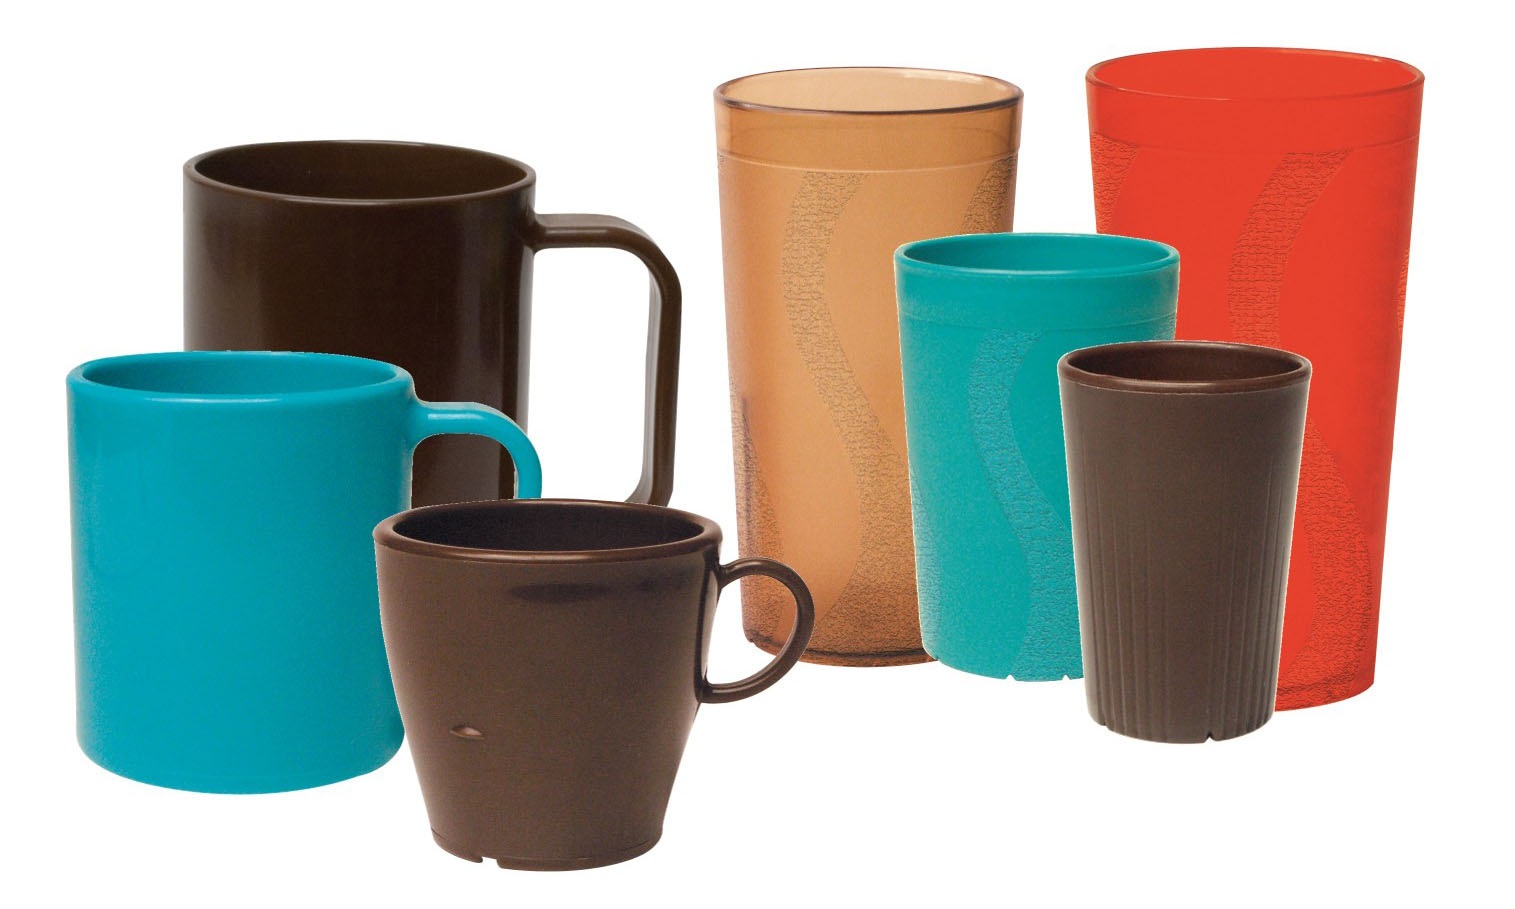 JonesZylon Cups Mugs Drinkware products